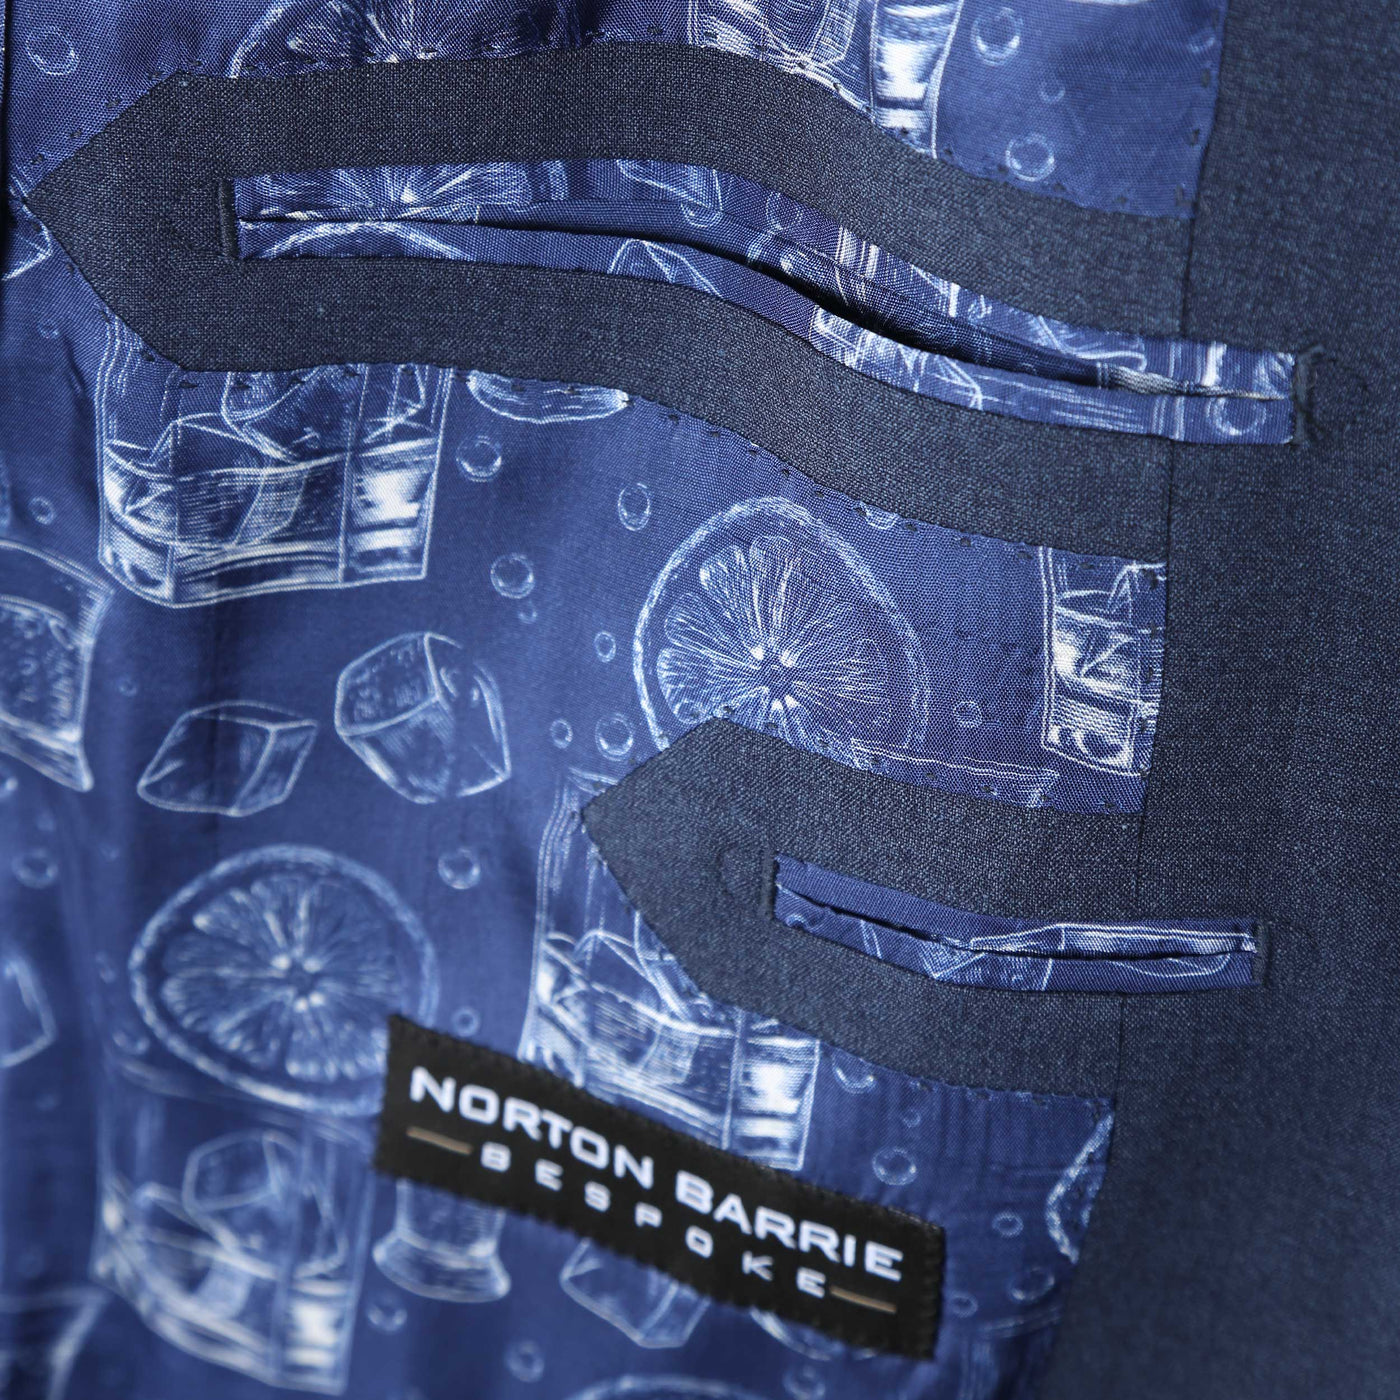 Norton Barrie Bespoke Suit in Denim Blue Inside Pocket